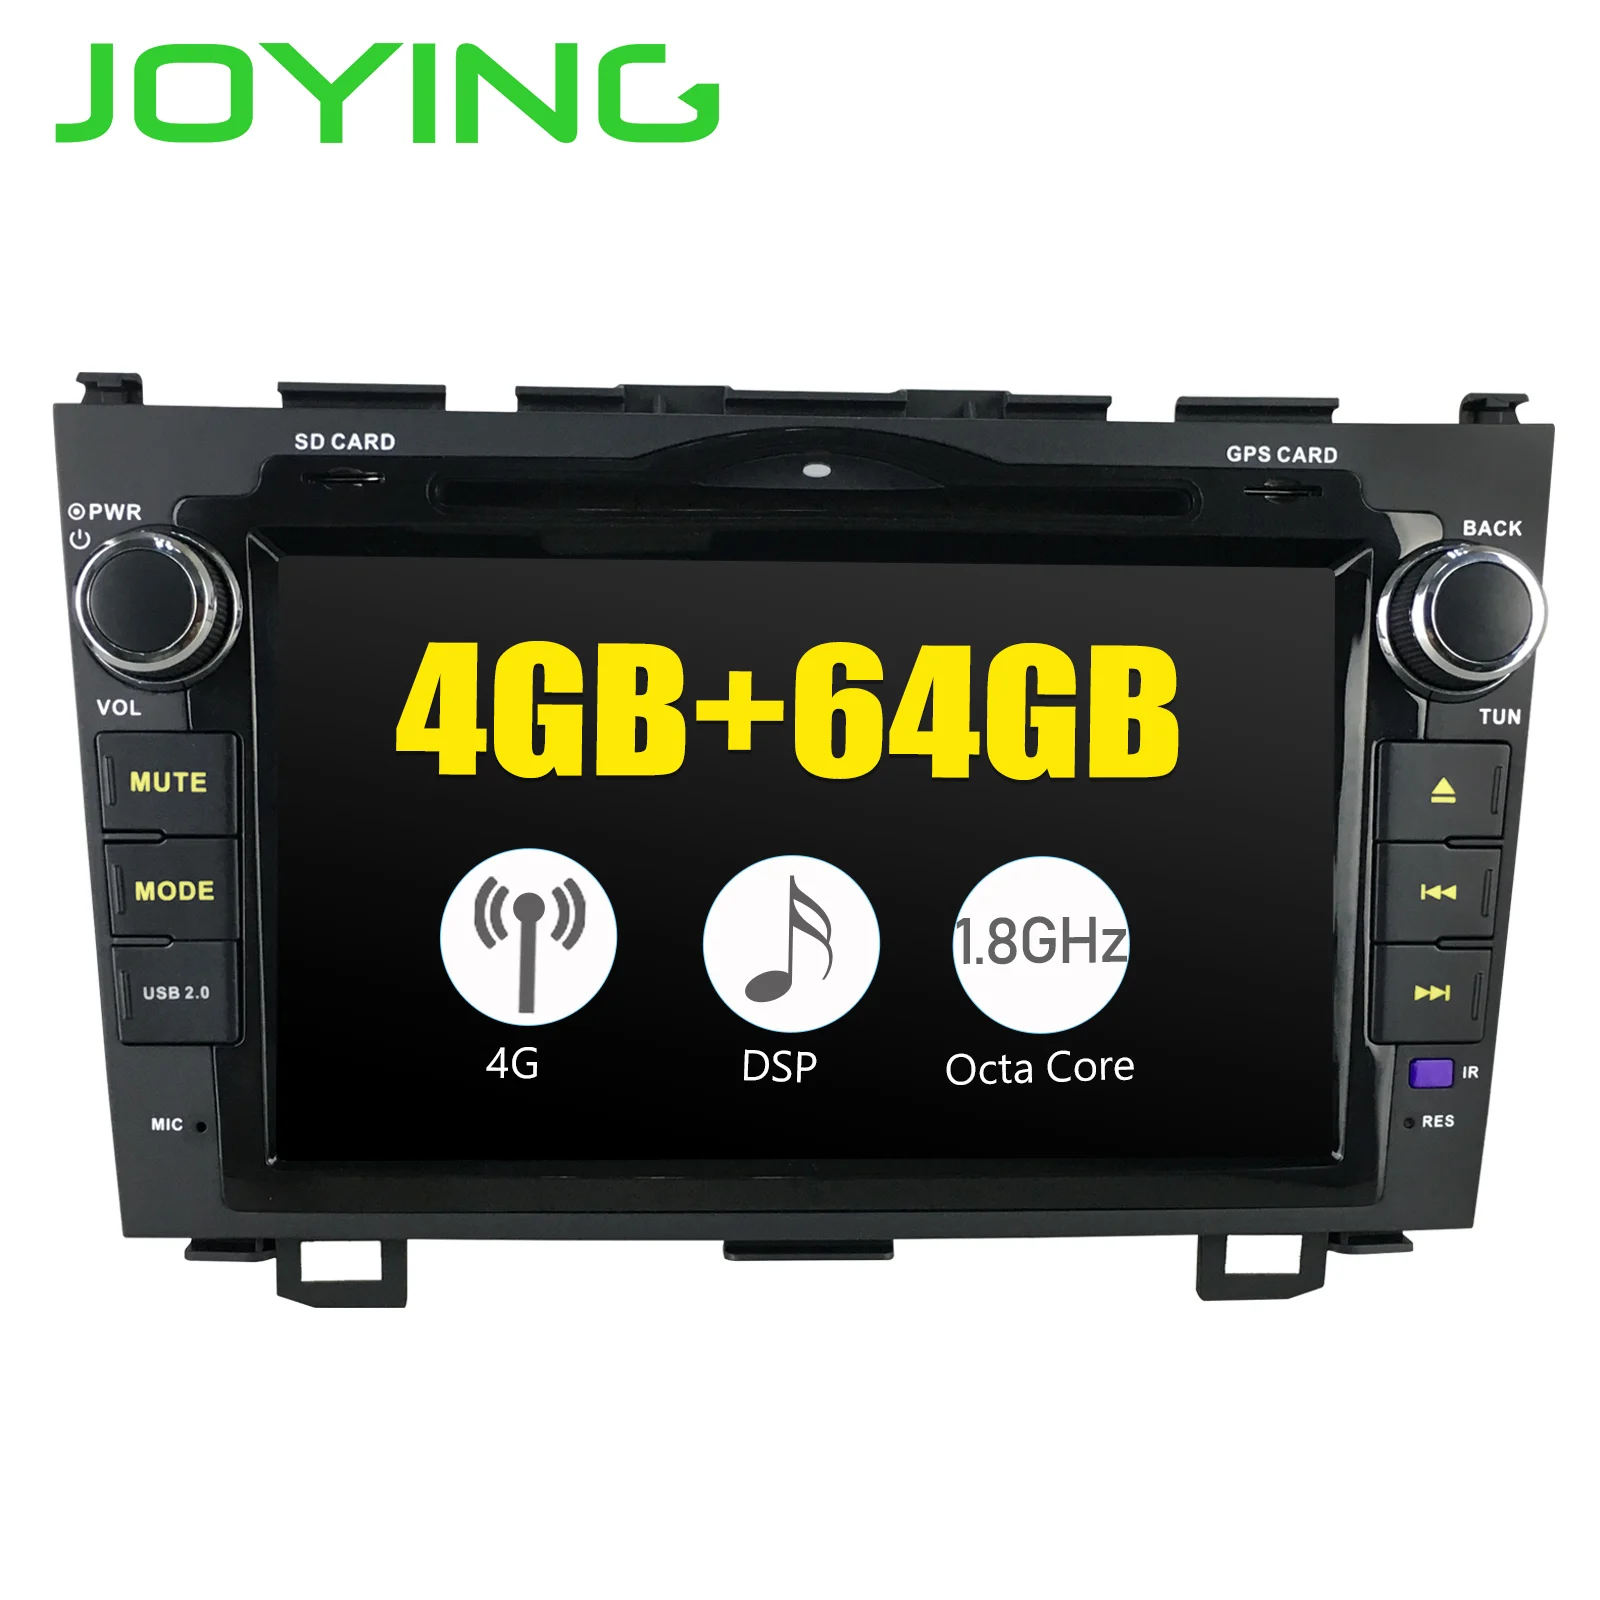 Sale 8" Universal Head Unit Android Car Radio Stereo GPS Navi 4GB+64GB For Honda CRV CR-V Multimedia Player Built-in DSP 4G Modem 1